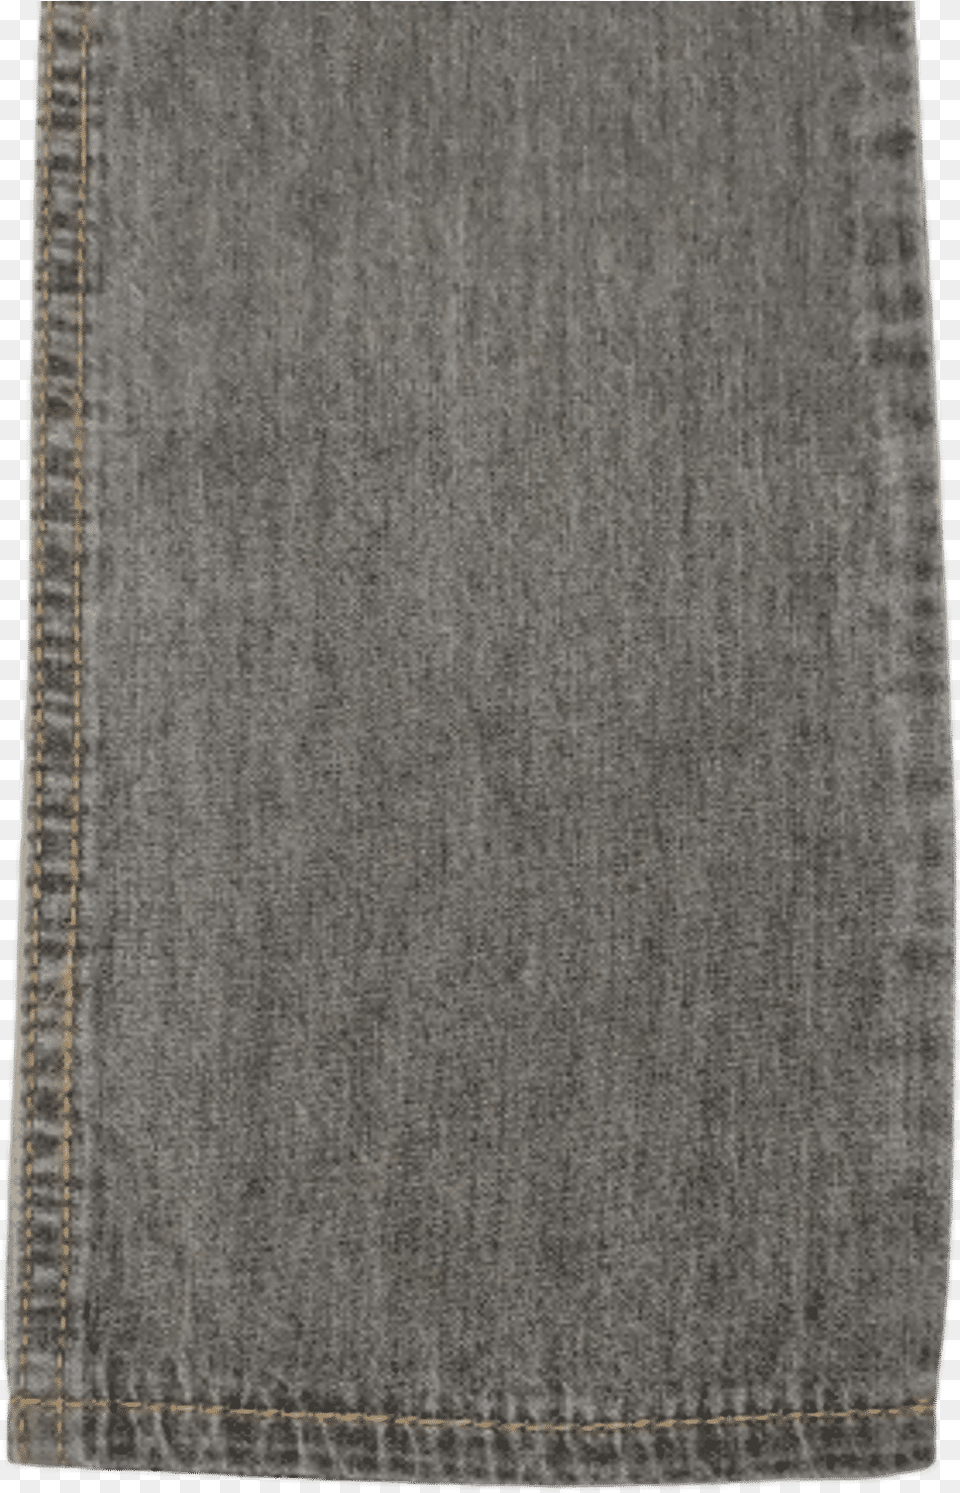 Shirting Denim Fabric Wool, Home Decor, Rug, Book, Publication Png Image